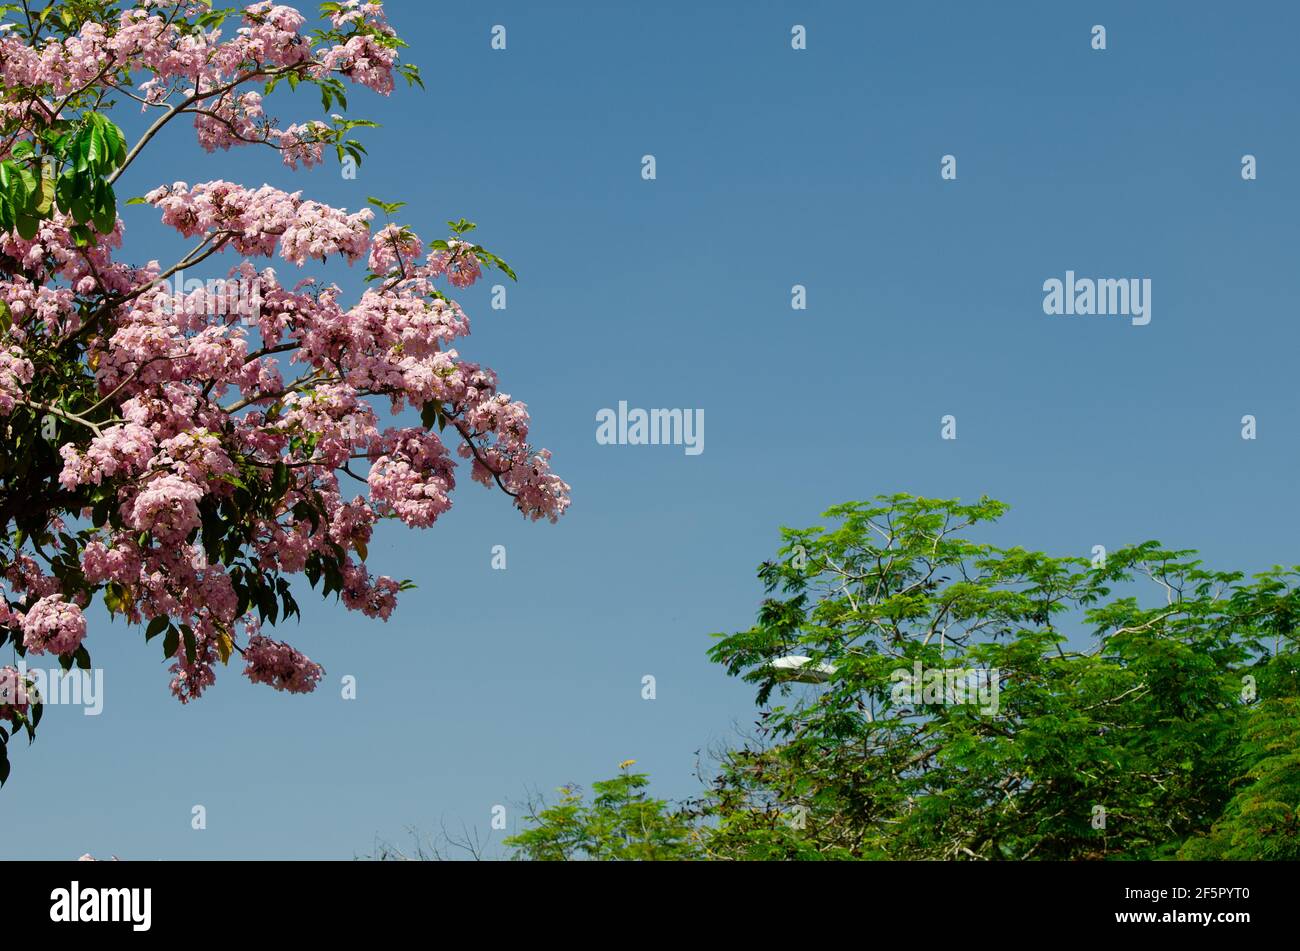 The flower blossom of tecoma tree in Malaysia Stock Photo